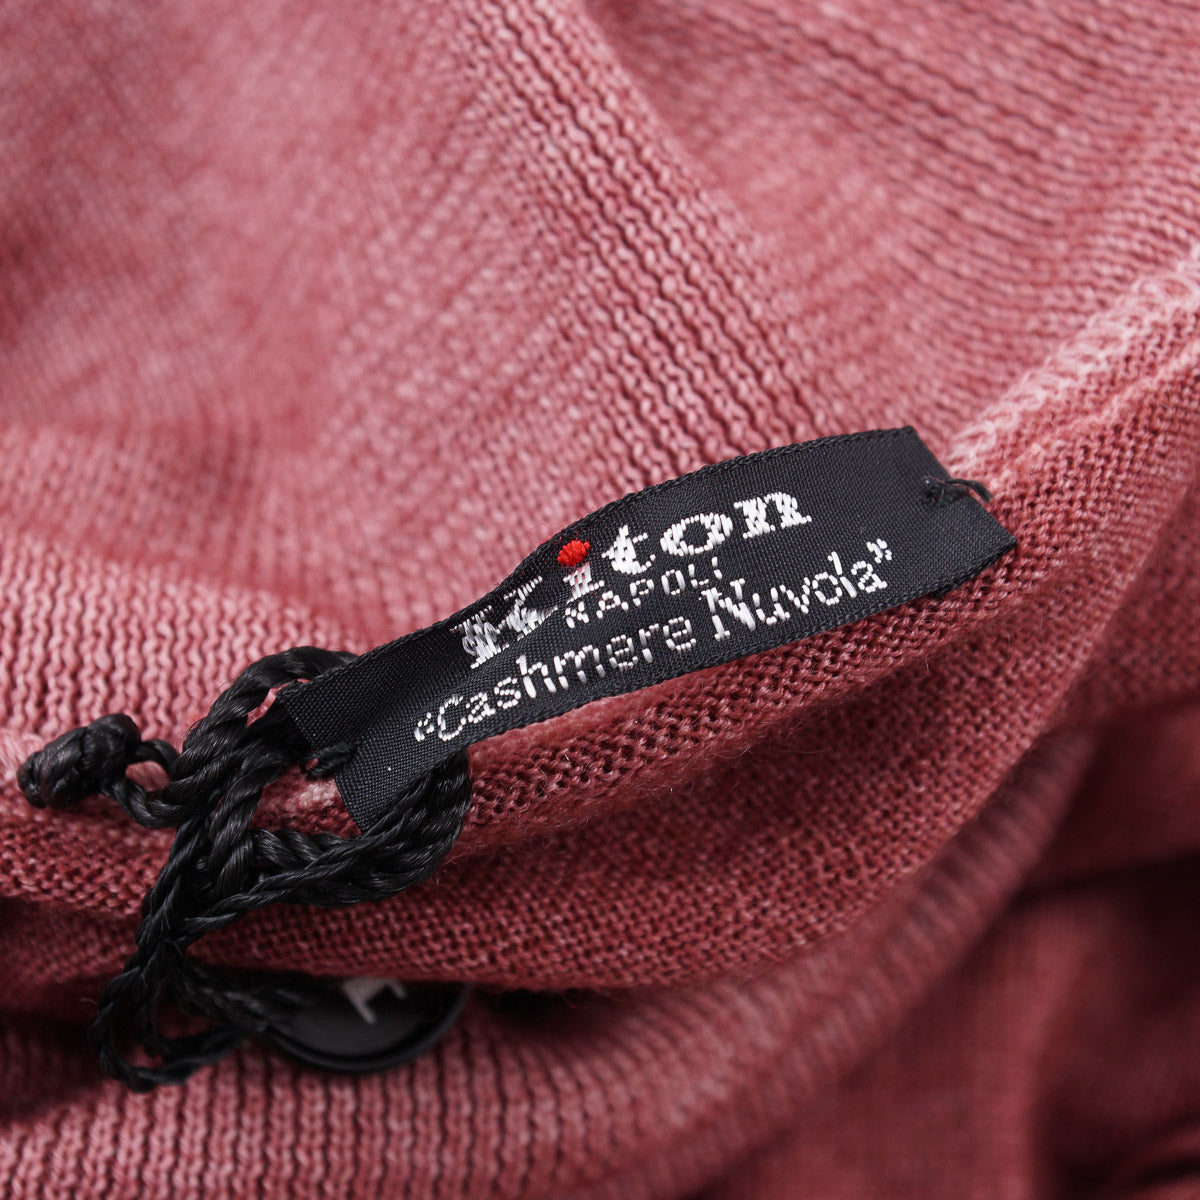 Kiton Superfine Cashmere Nuvola Sweater - Top Shelf Apparel